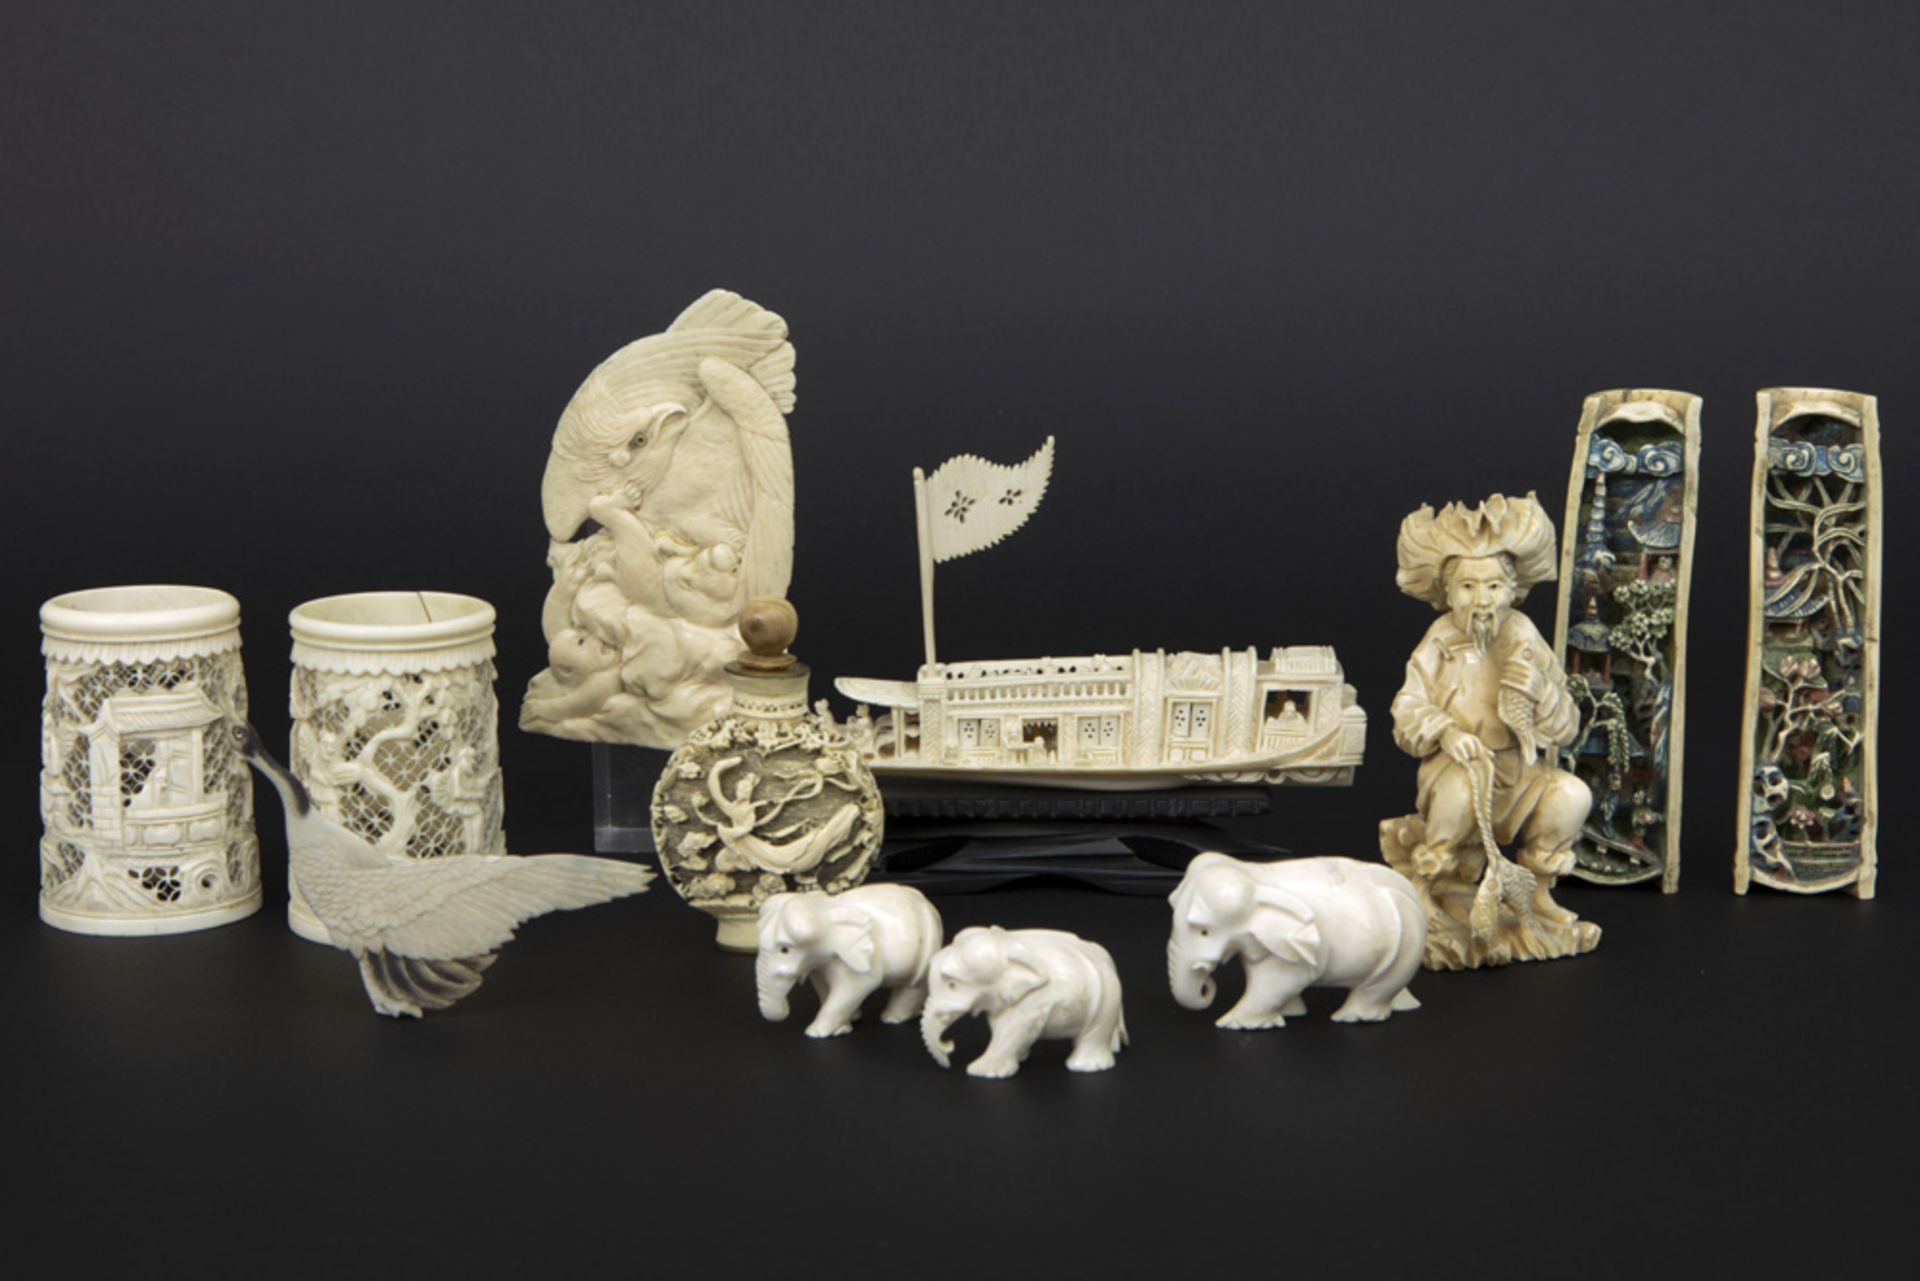 five small ivory items : 4 elephants and a vase || Lot (5) ivoor met olifantjes en een vaasje